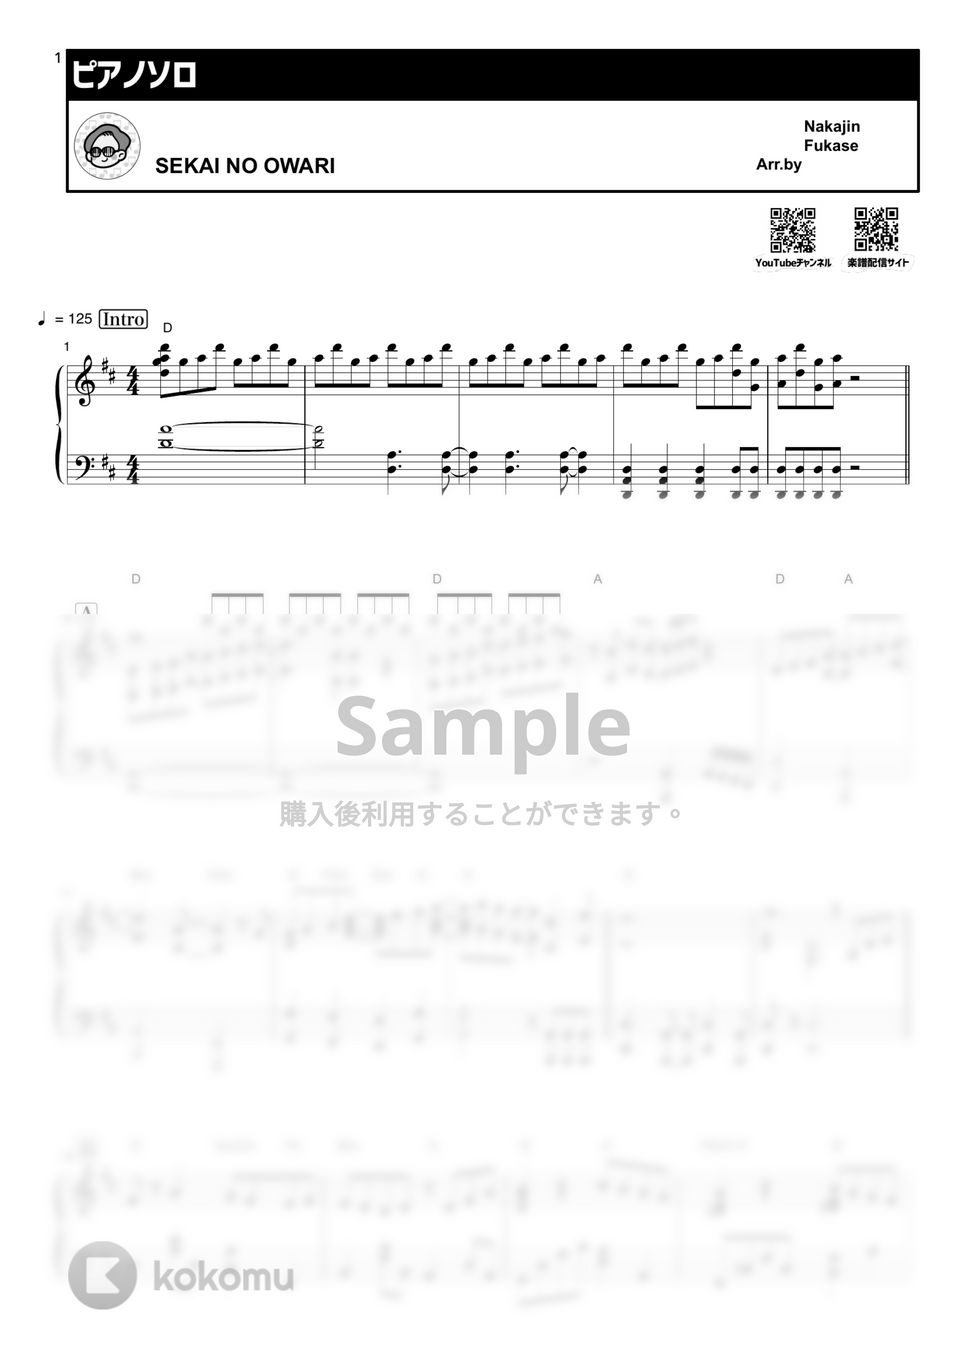 SEKAI NO OWARI - スノーマジックファンタジー by シータピアノ